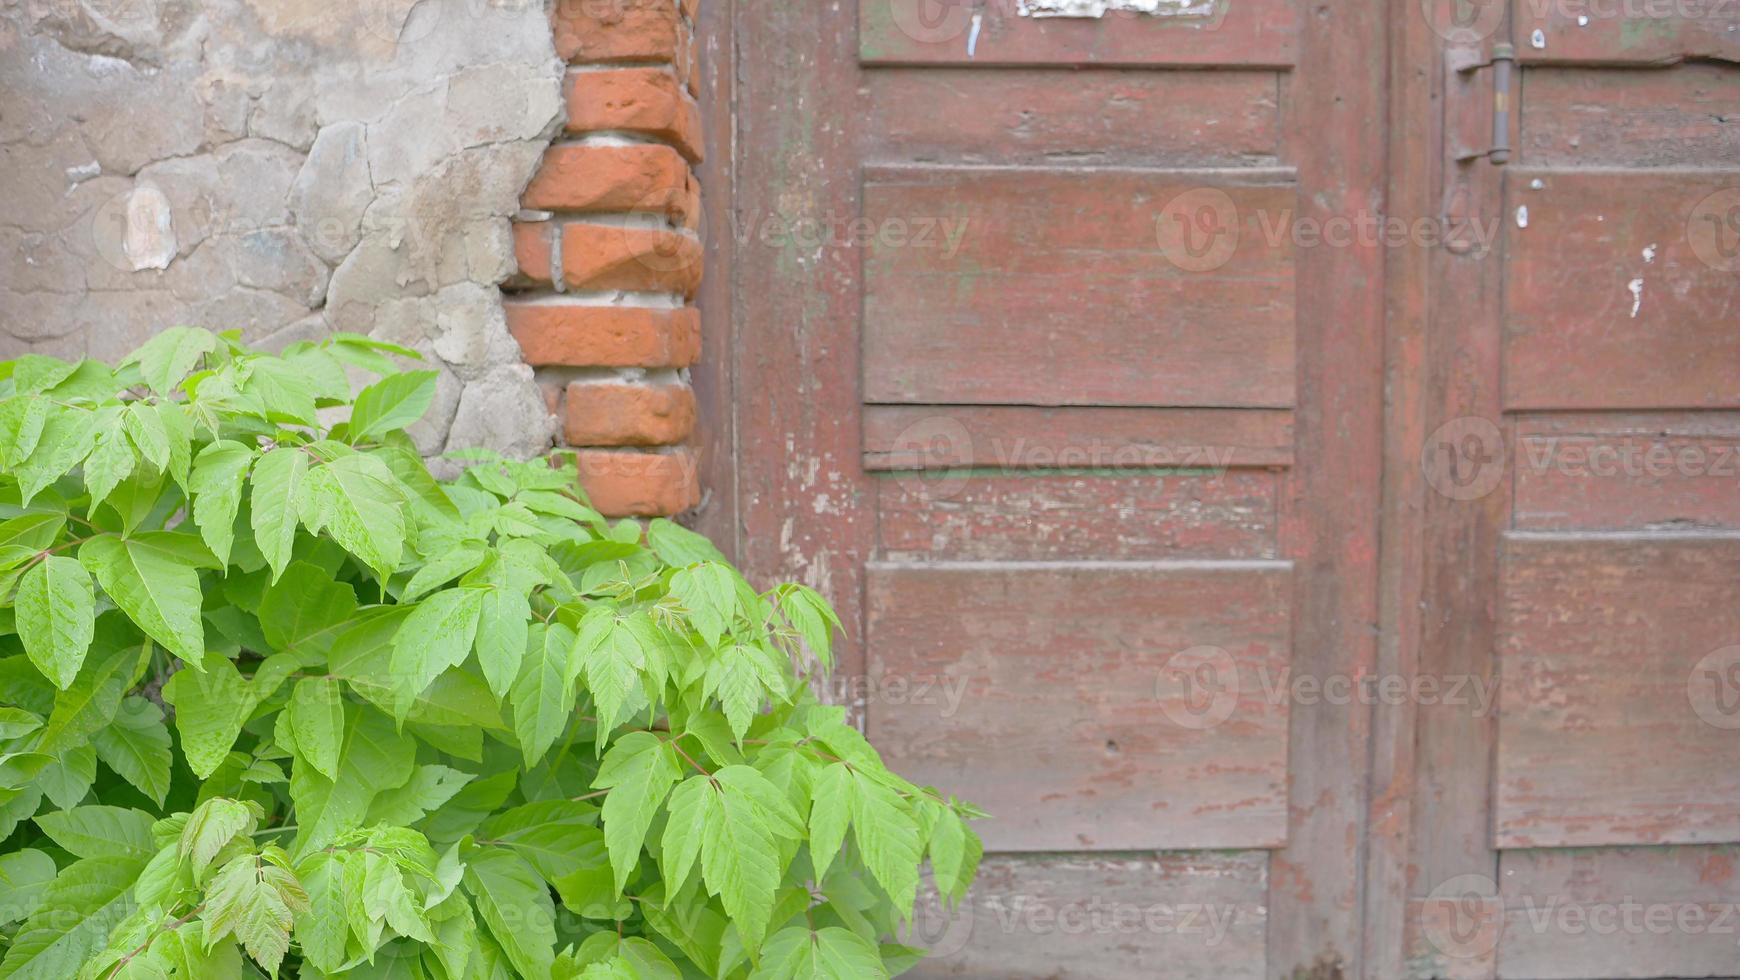 old broken concrete brick wall wooden door plant leaf background image photo